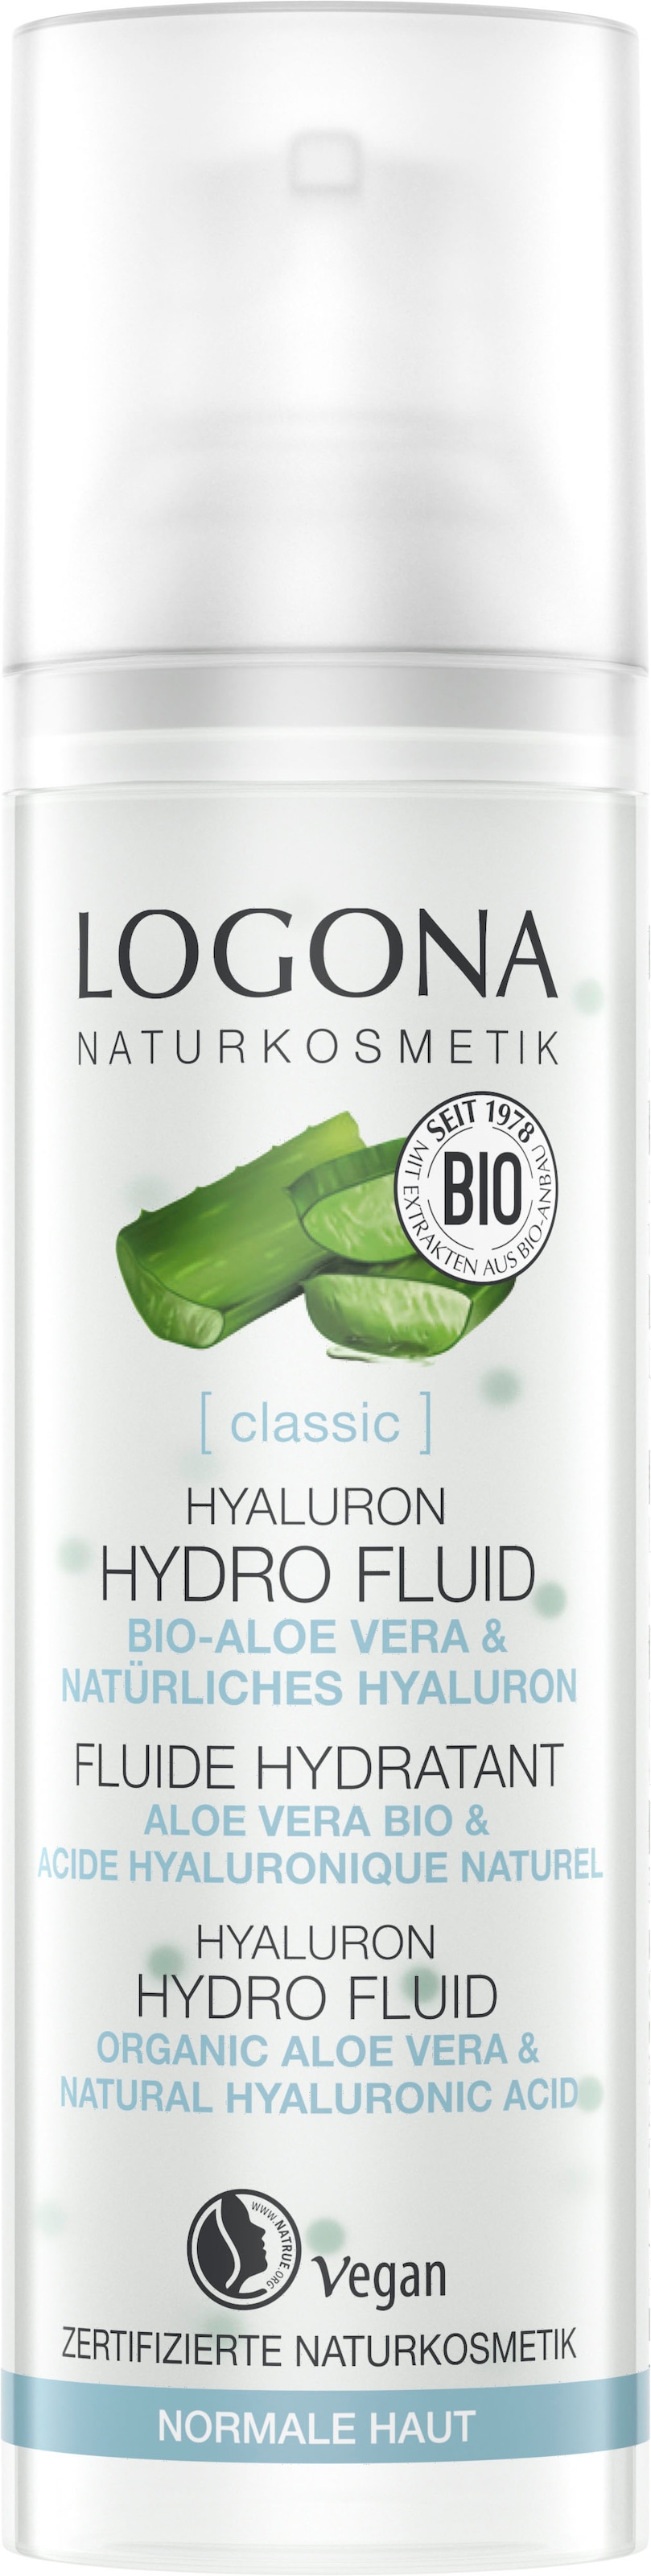 LOGONA Gesichtsfluid »Logona classic Hyaluron Fluid« ♕ Hydro bei